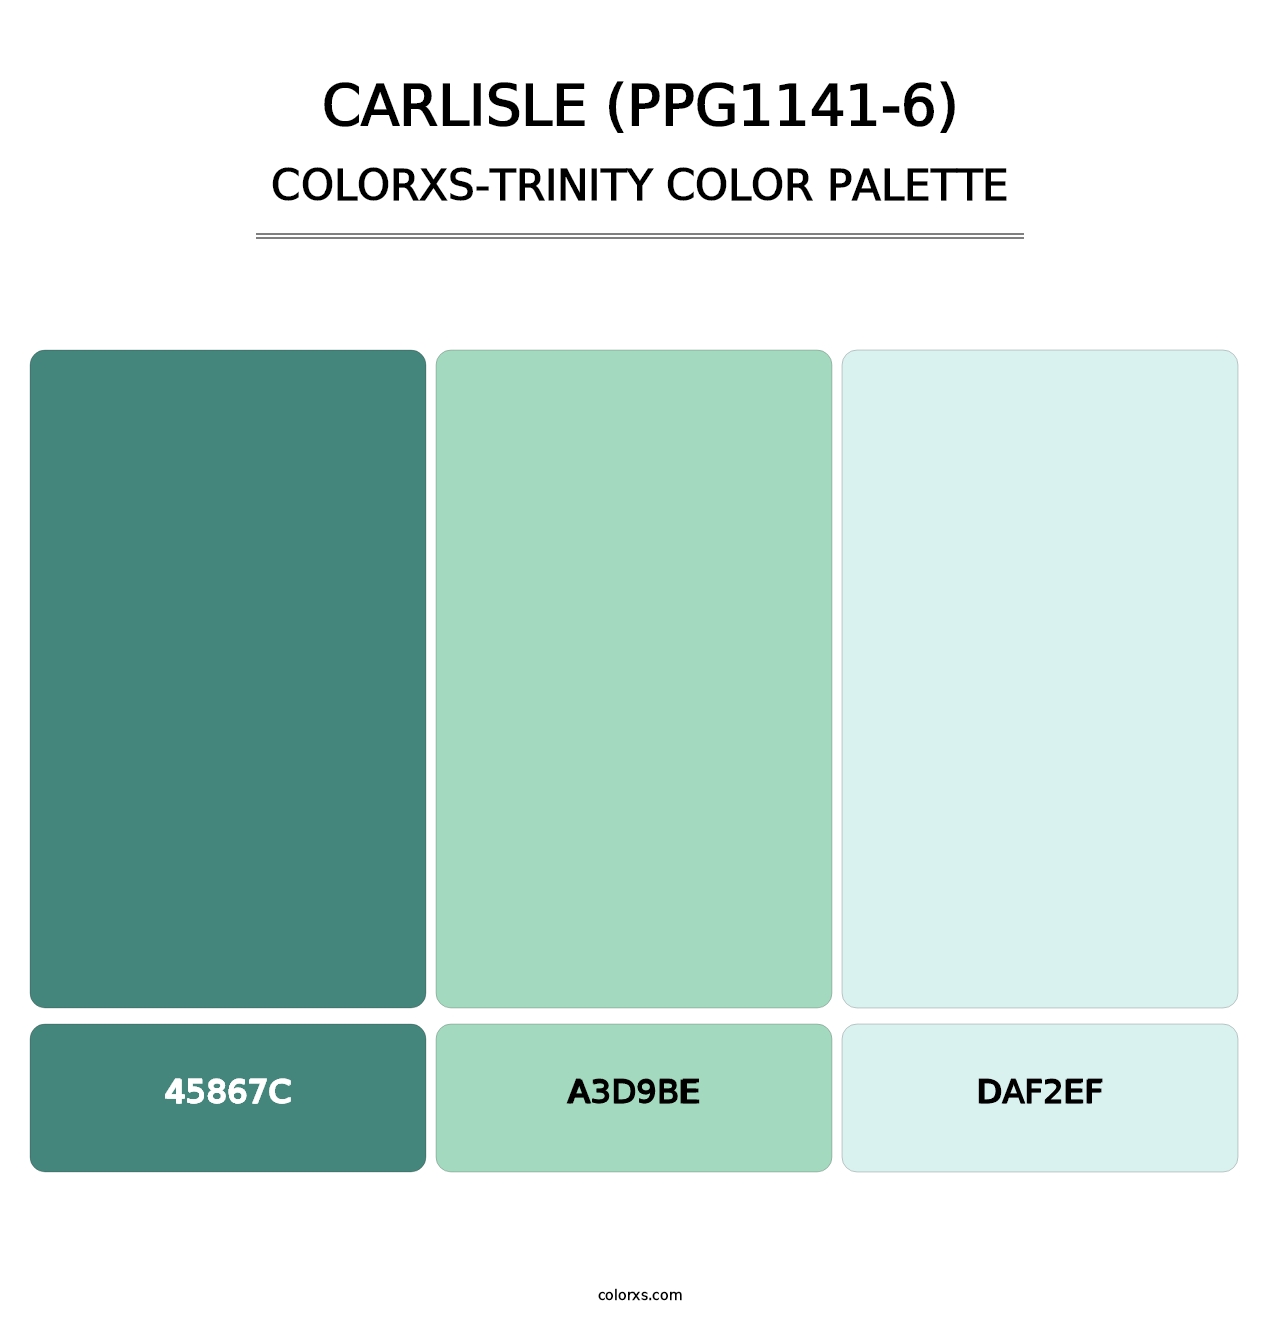 Carlisle (PPG1141-6) - Colorxs Trinity Palette